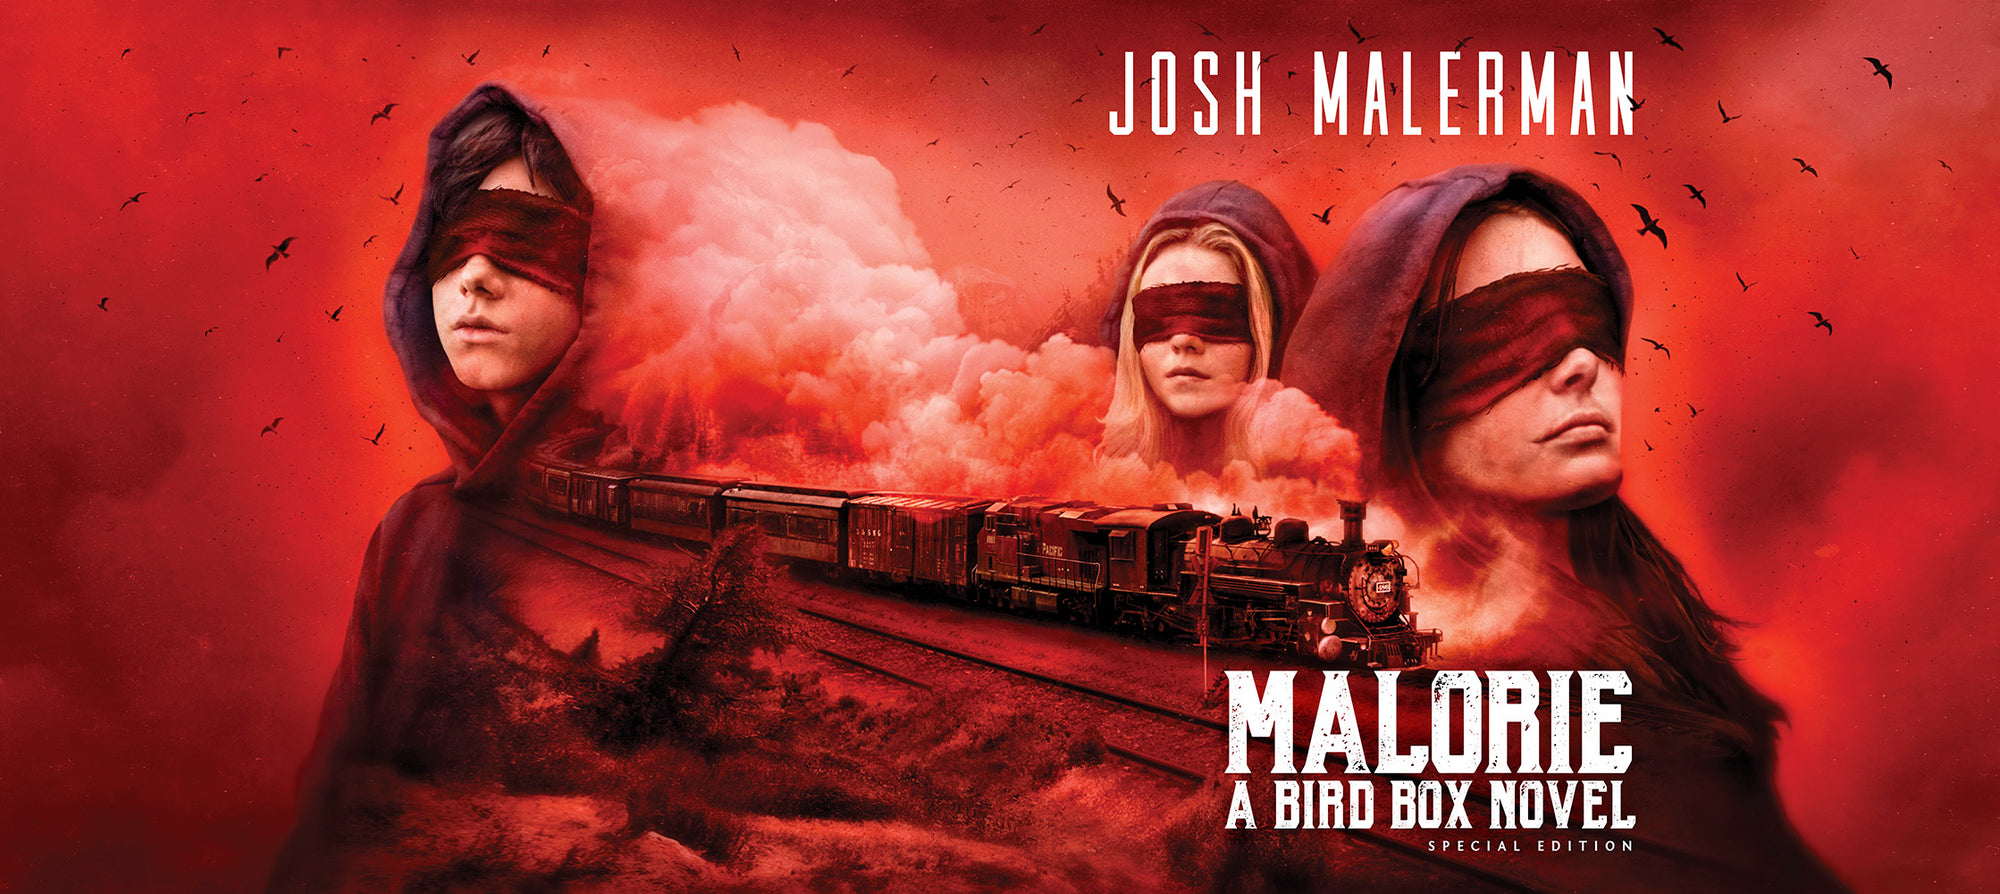 Bird Box Weekend! Get ARC of Malorie: A Bird Box Novel Special Edition by Josh Malerman